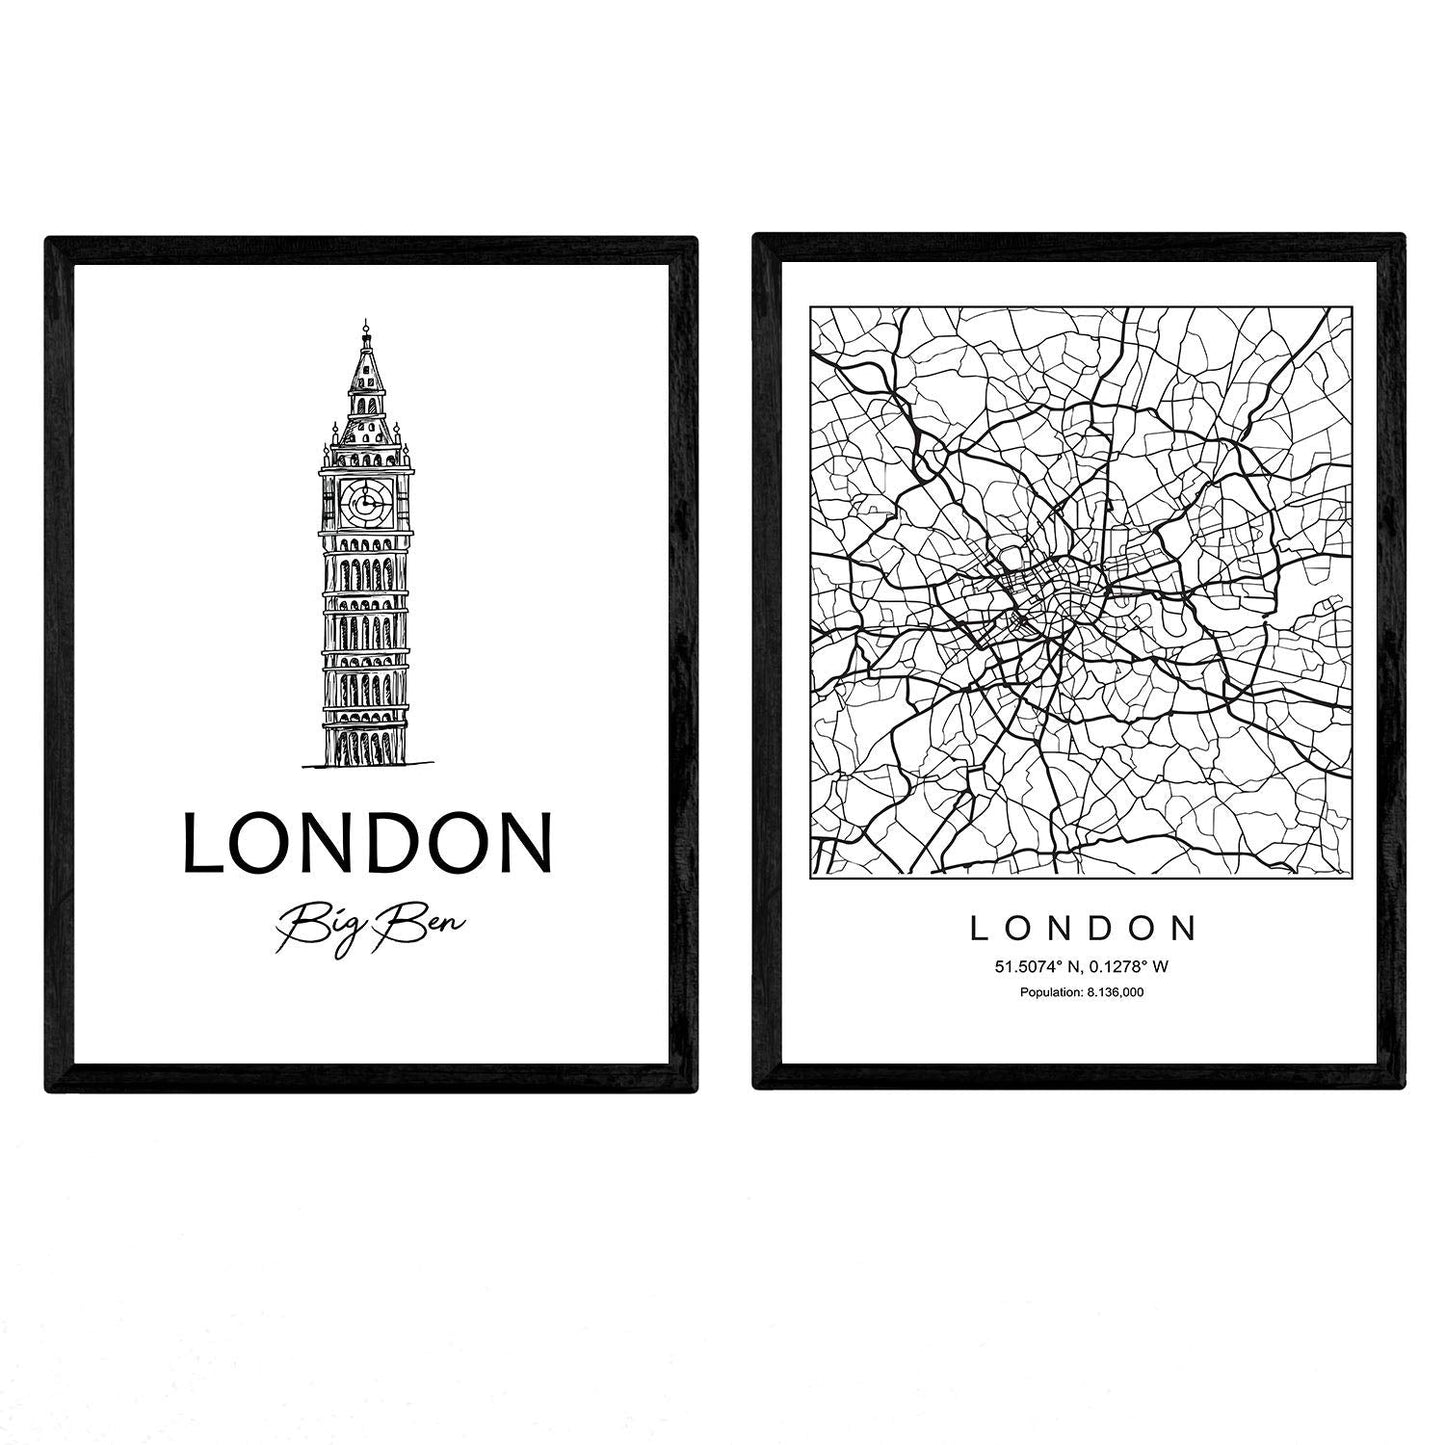 Pack de posters de Londres - Big Ben. Láminas con monumentos de ciudades.-Artwork-Nacnic-Nacnic Estudio SL